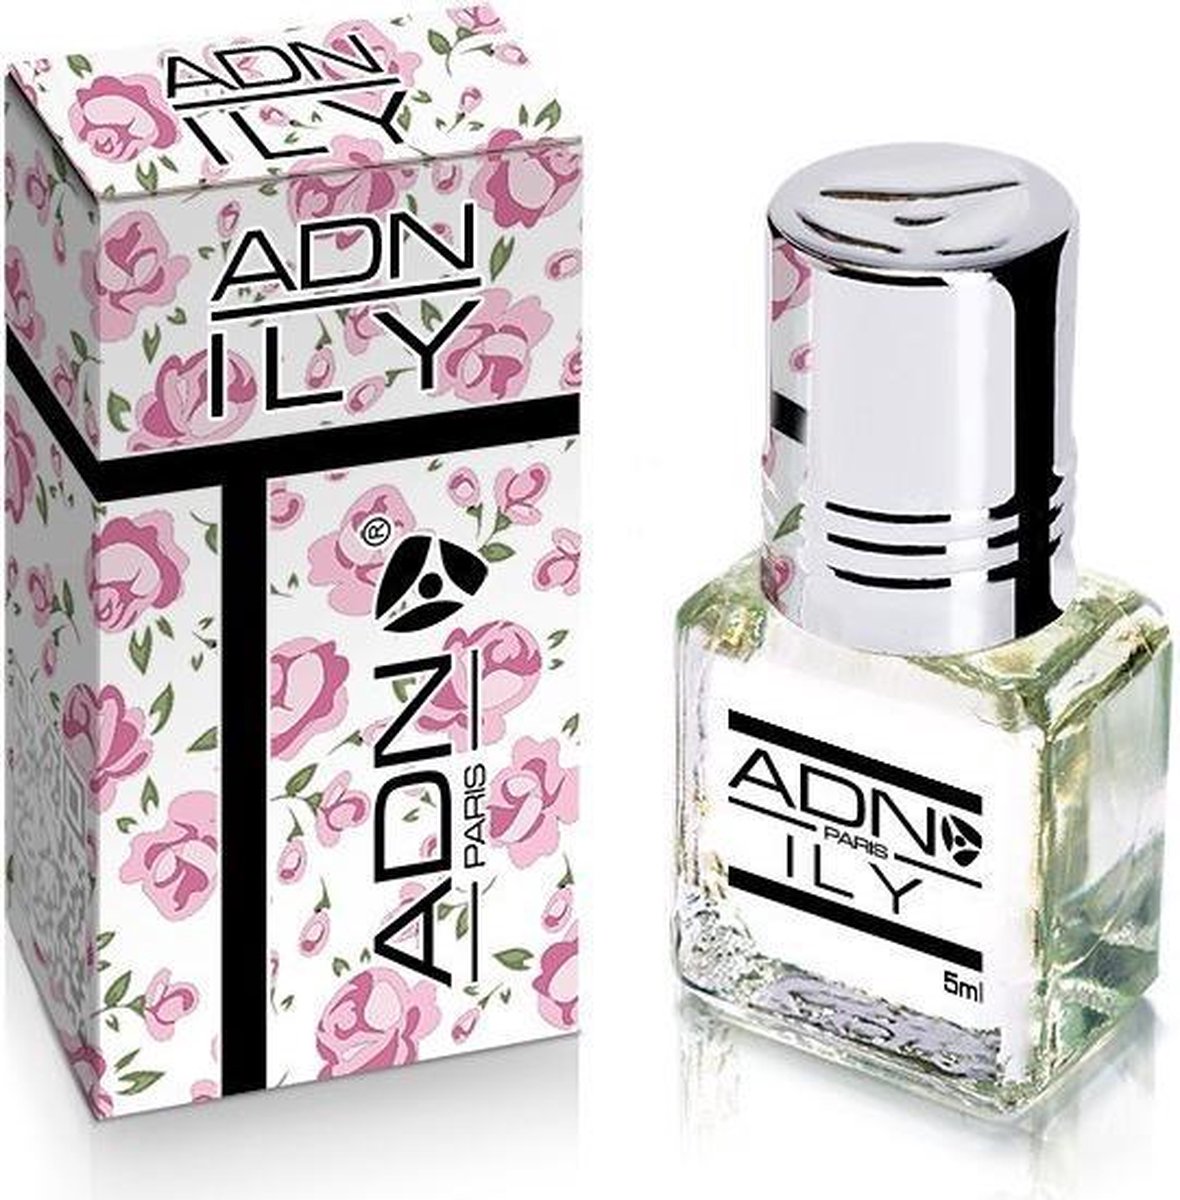 Parfum: Adn Musc - Ily